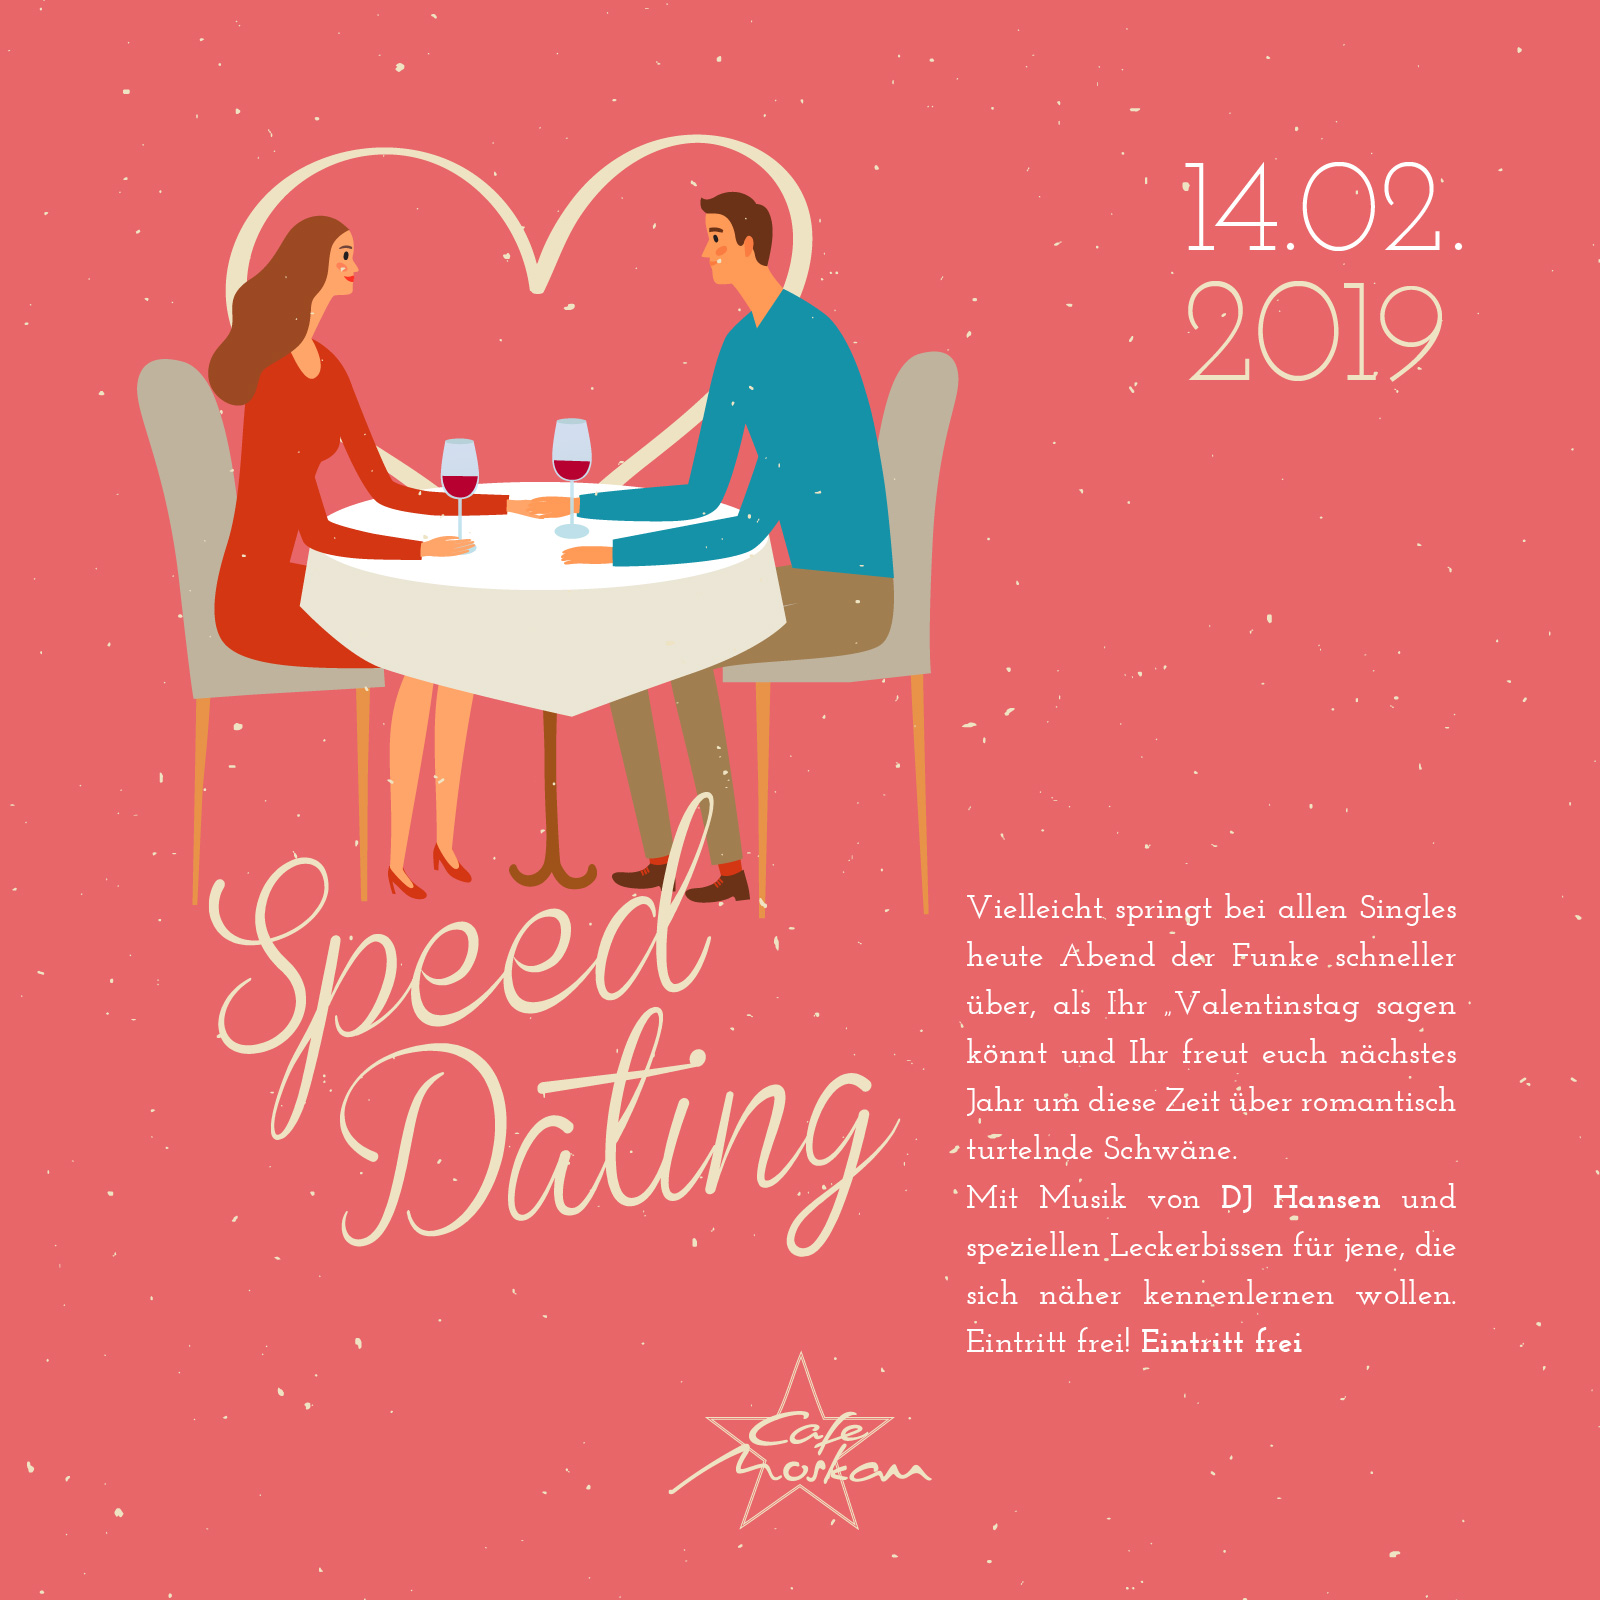 Speed dating karten